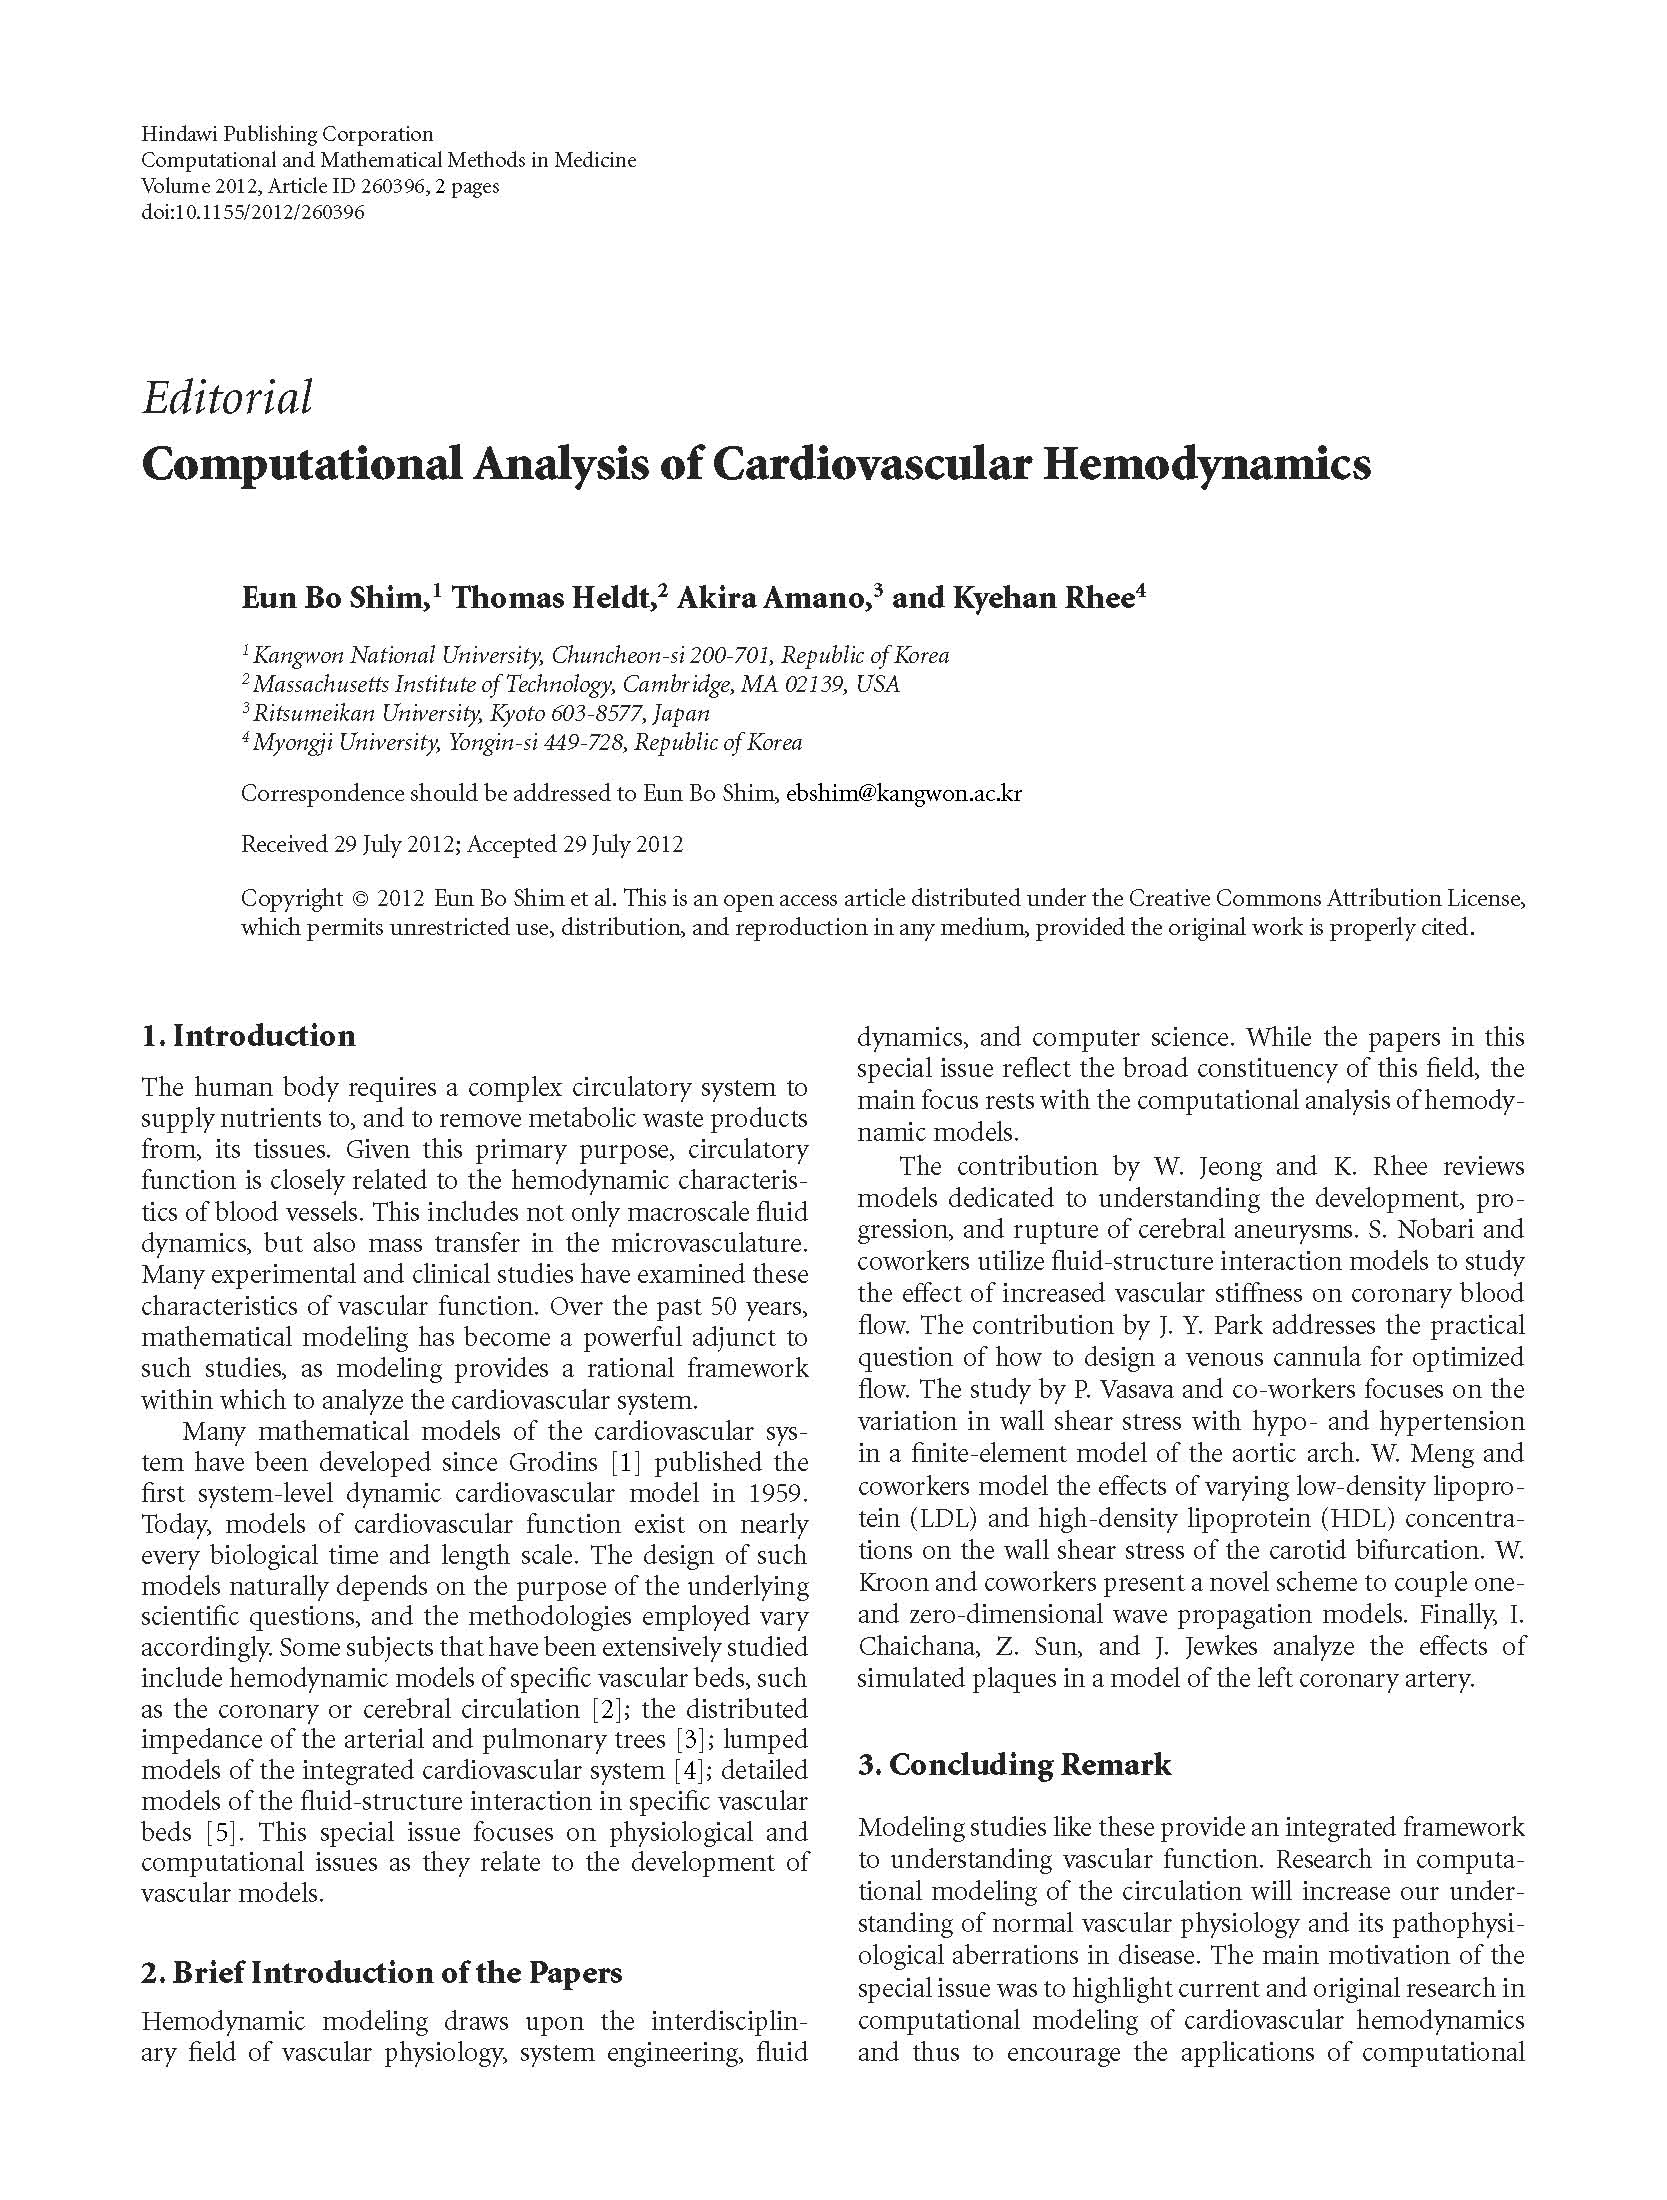 Computational Analysis of Cardiovascular Hemodynamics.jpg 1667X2200